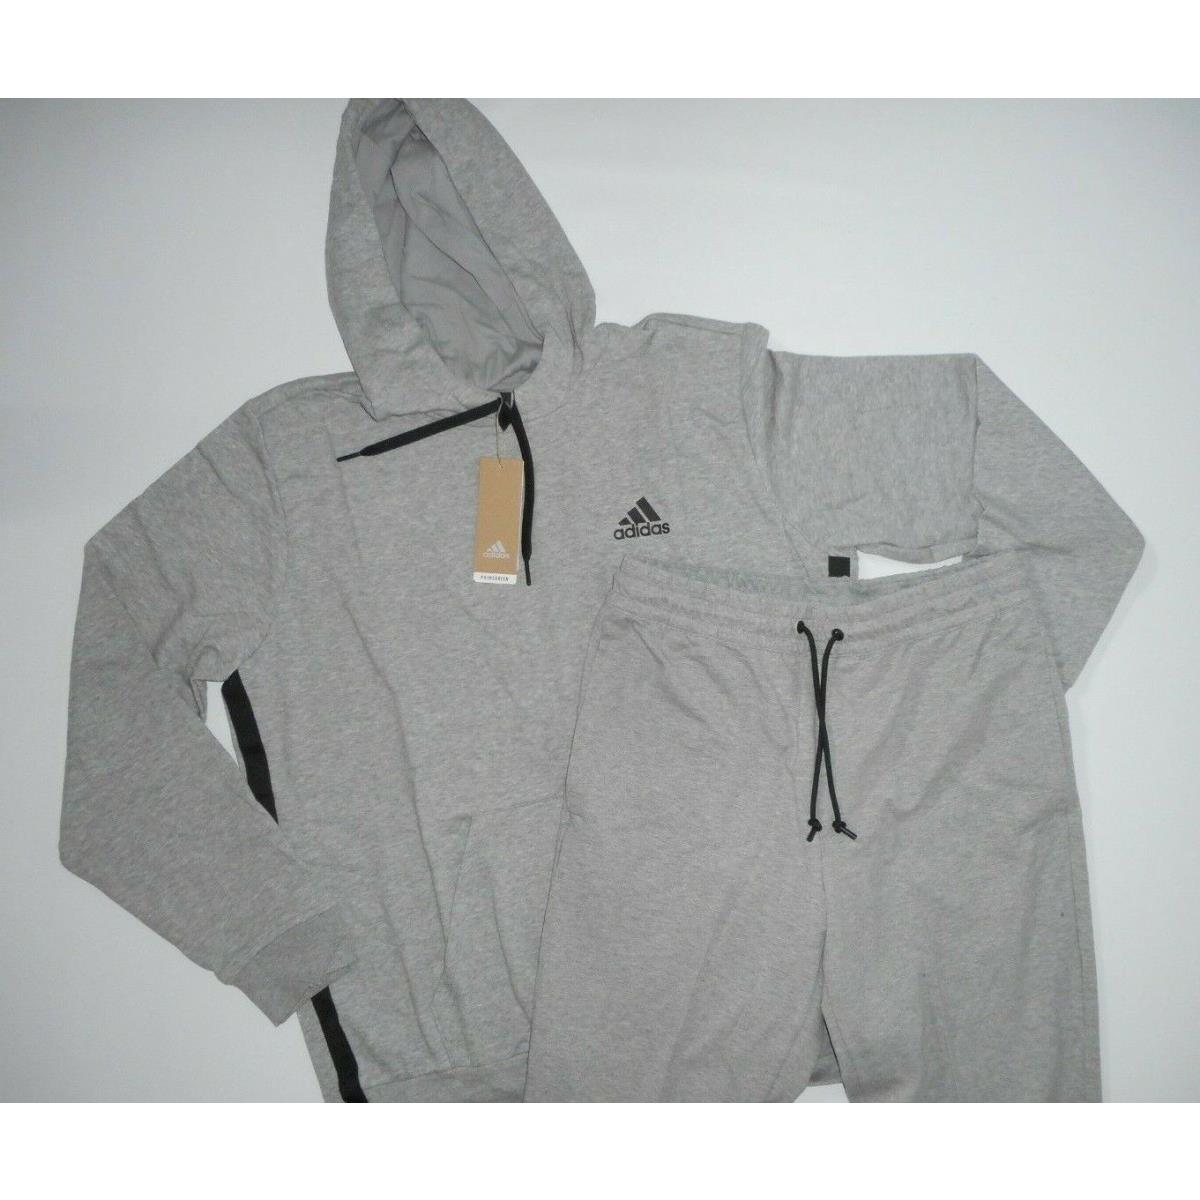 Adidas clothing  - Gray 3